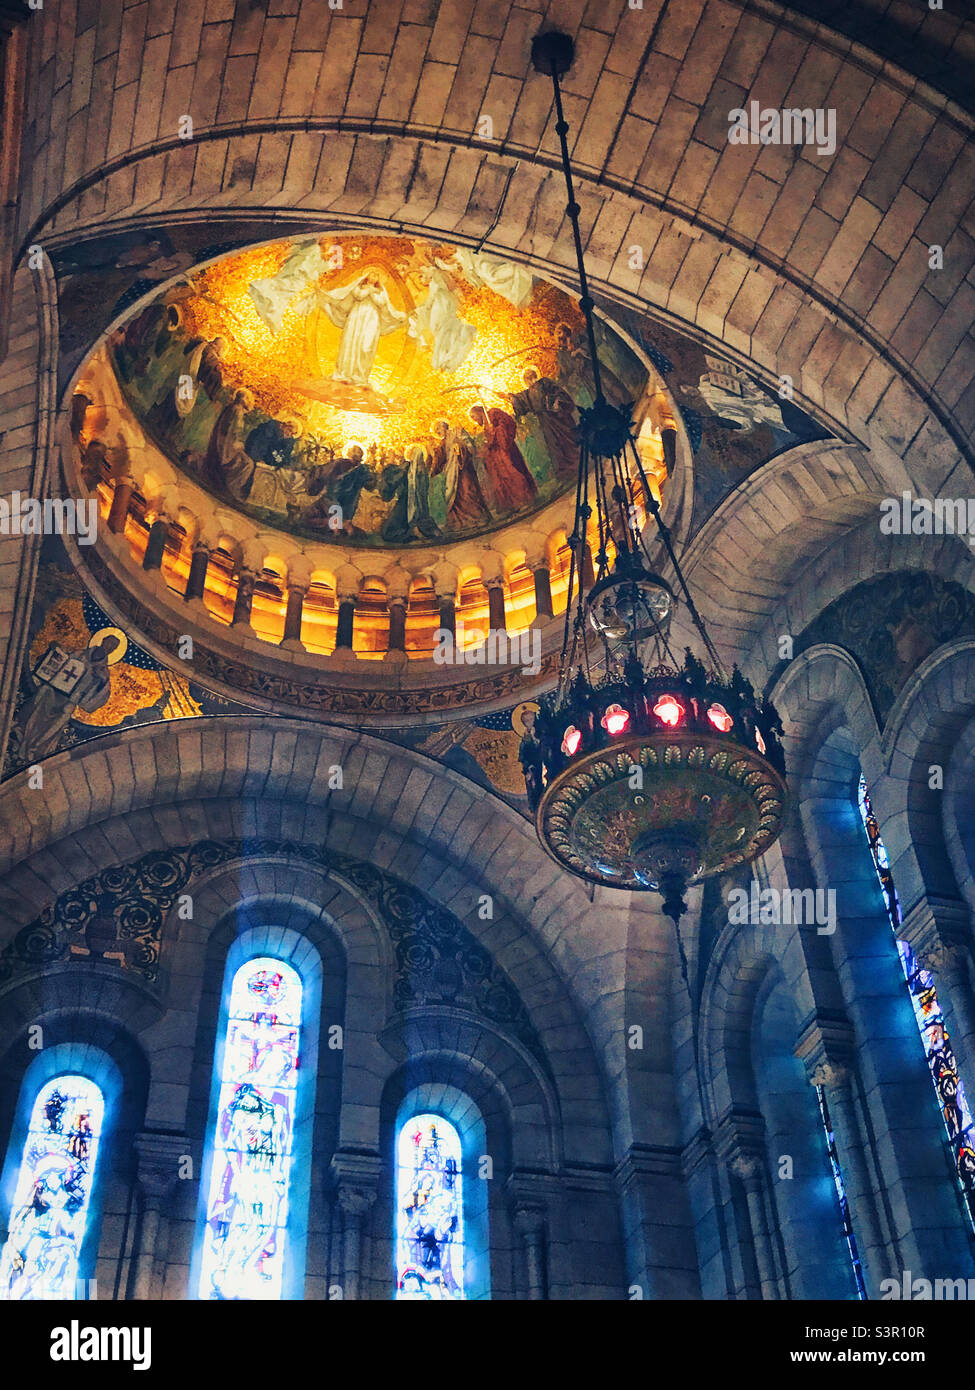 The beautiful interior of the Sacré-Cœur basilica in Montmartre, Paris Stock Photo